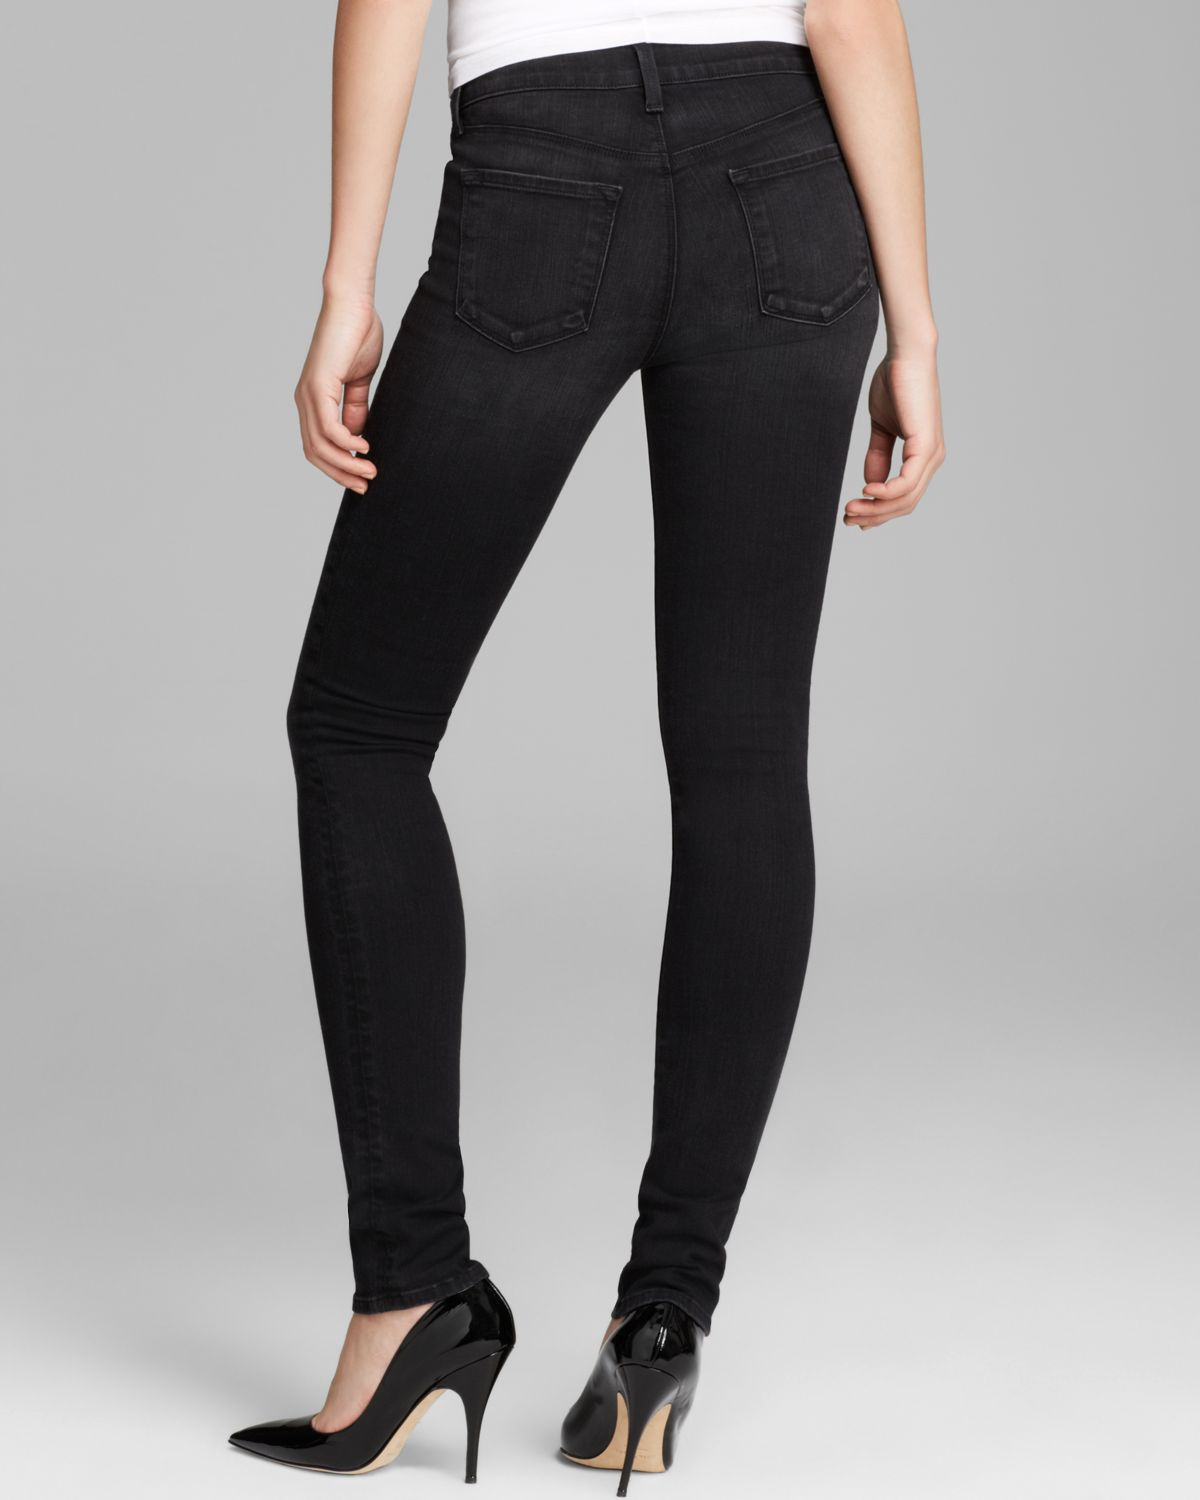 J Brand Jeans High Rise Rail in Graphite in Black - Lyst